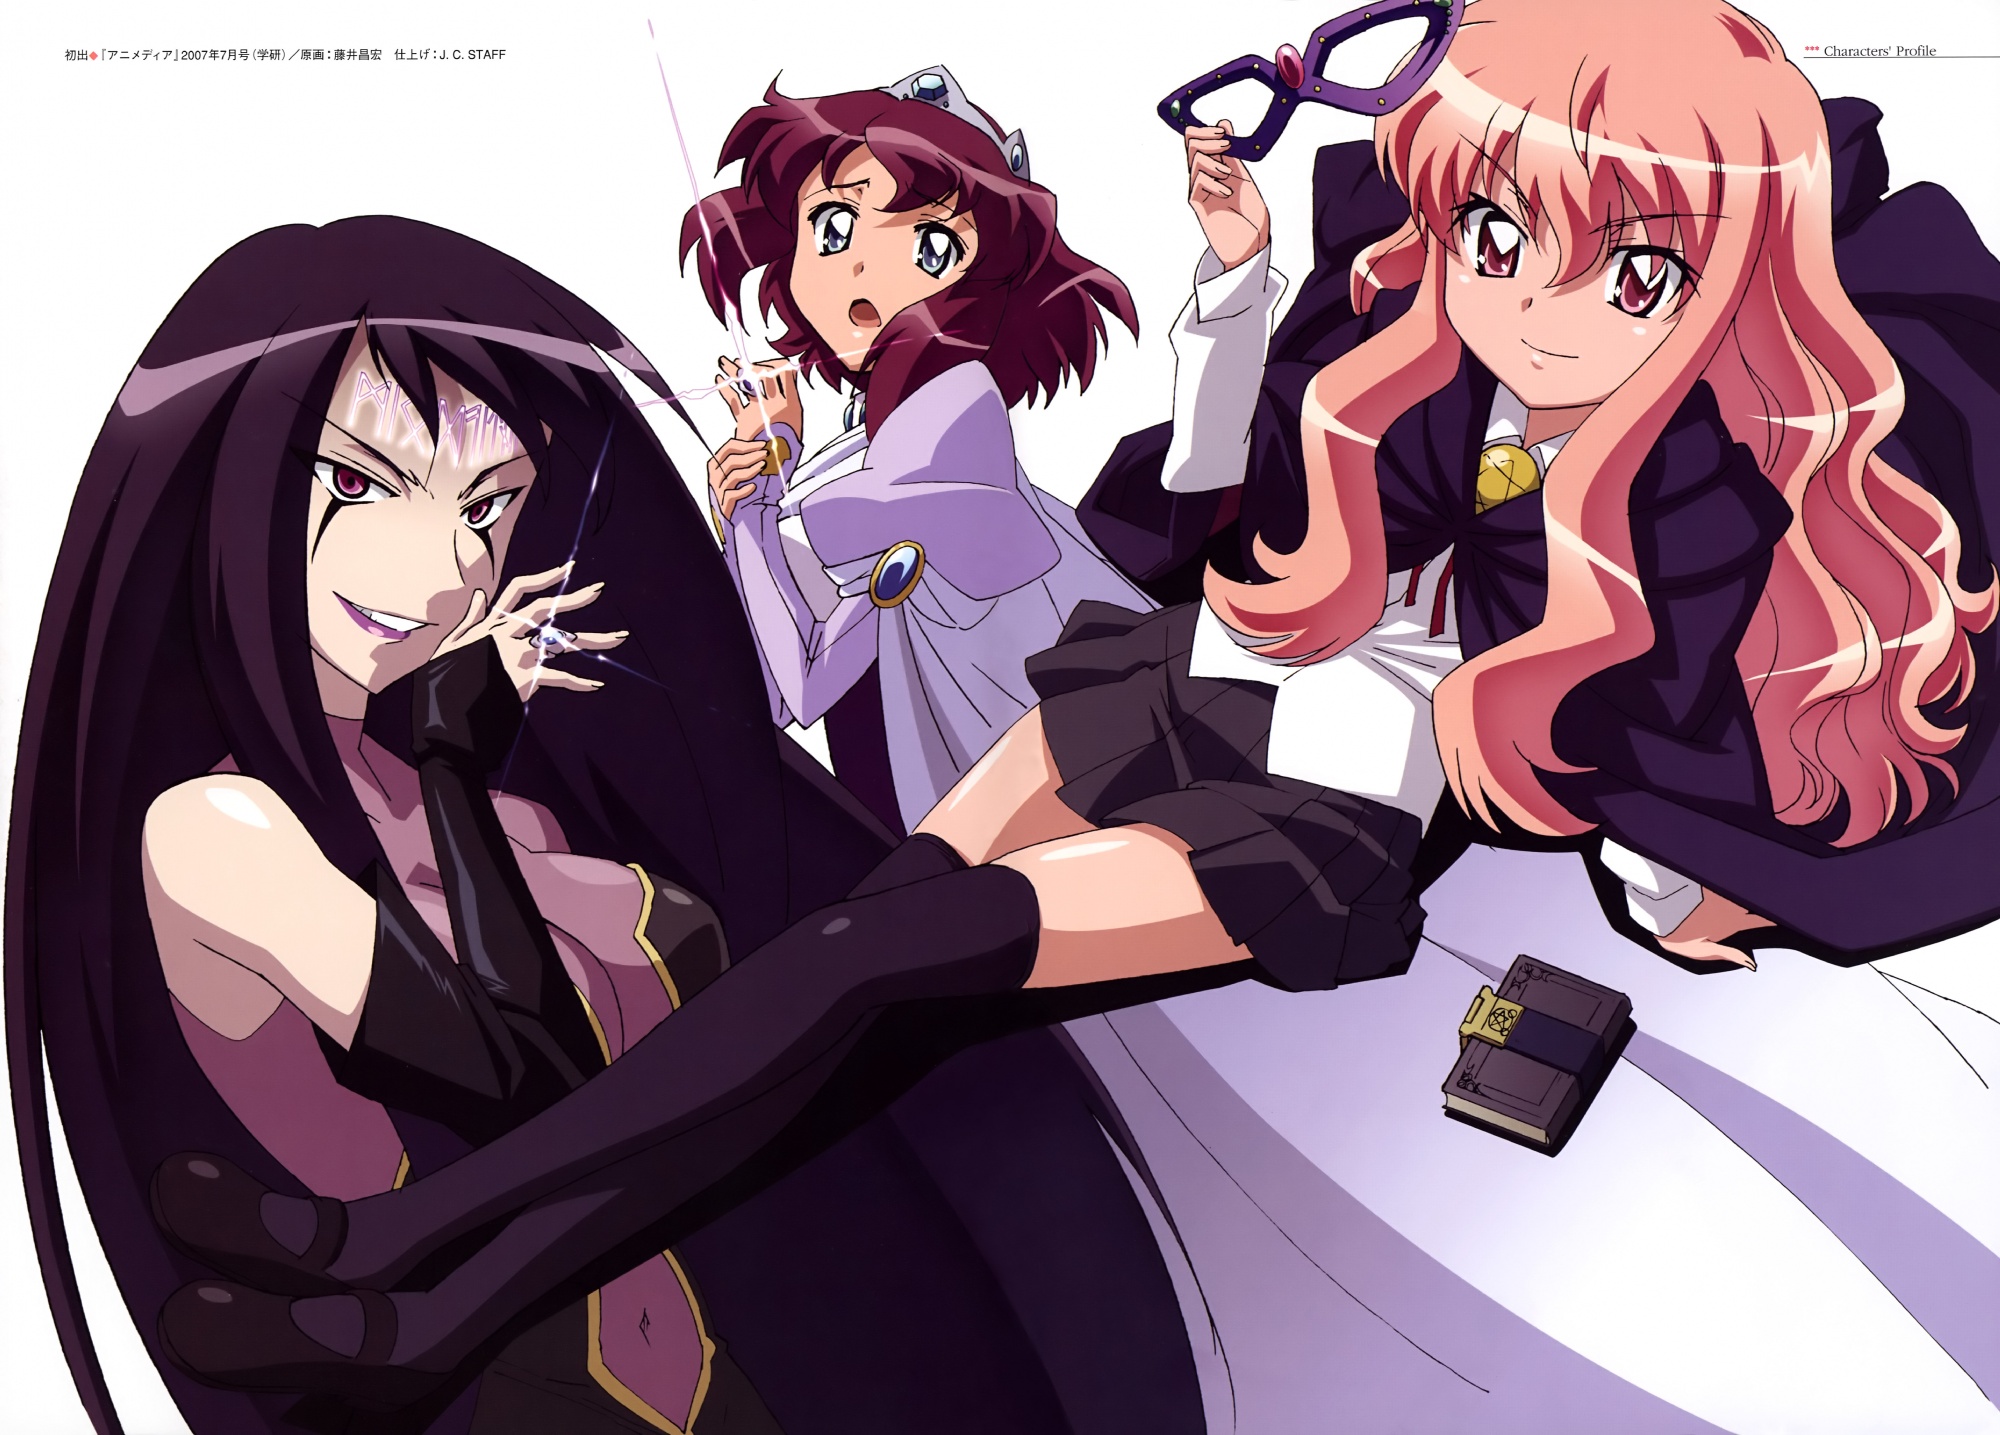 Anime wallpaper featuring characters from Zero no Tsukaima.